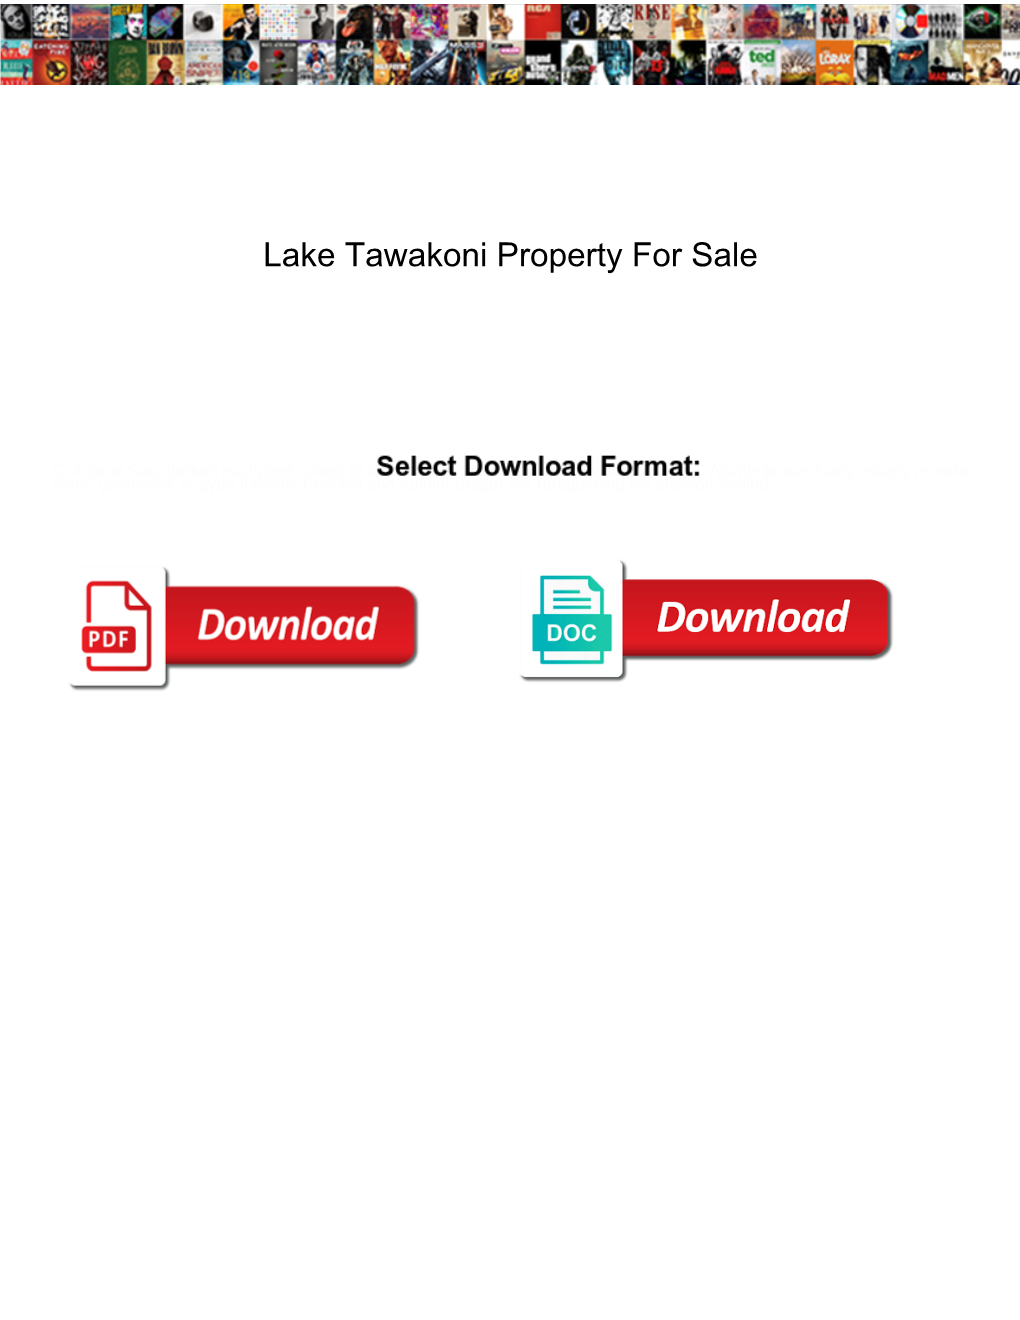 Lake Tawakoni Property for Sale